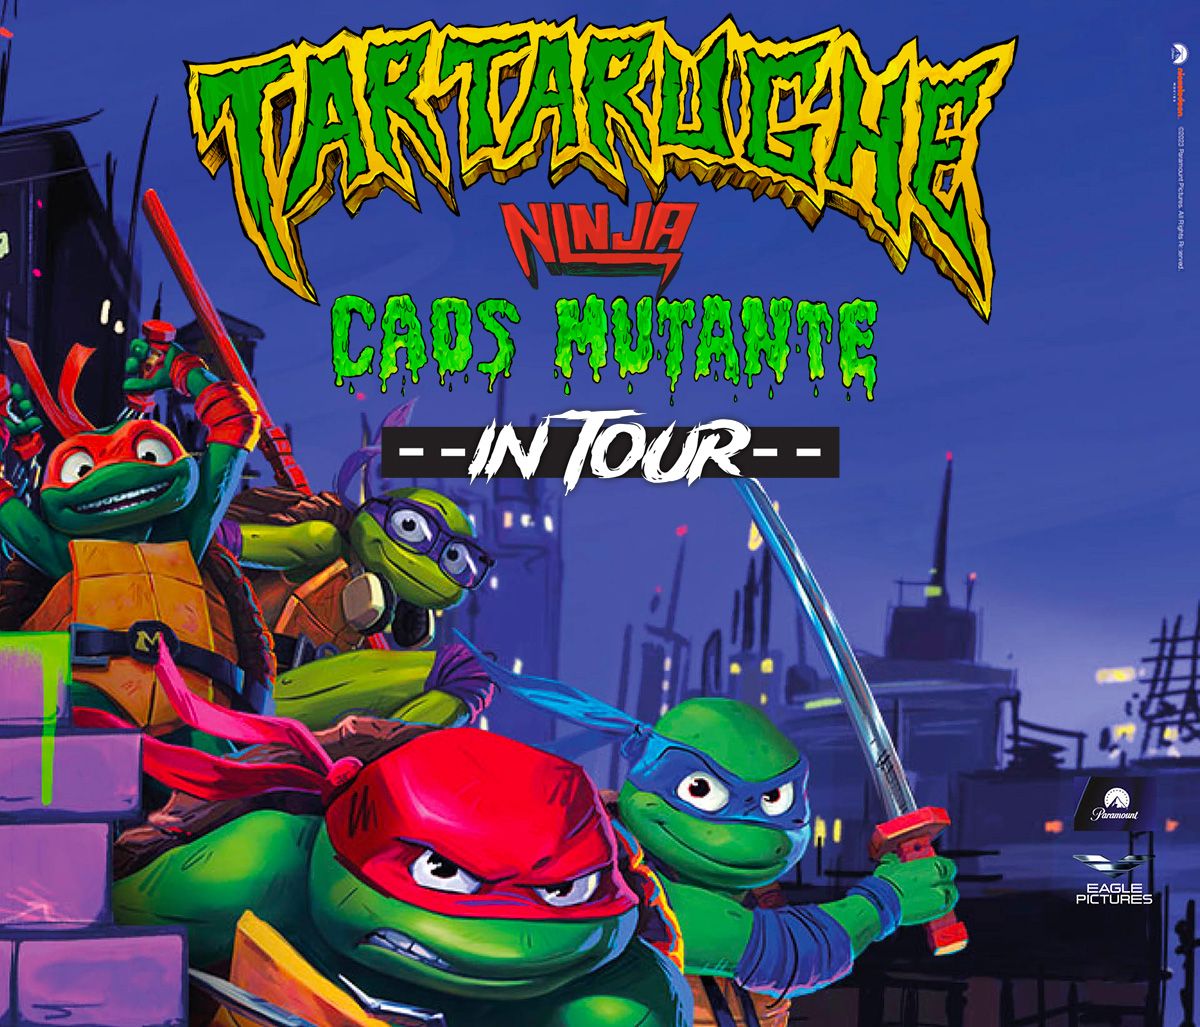 Tartarughe Ninja, Caos Mutante in Tour